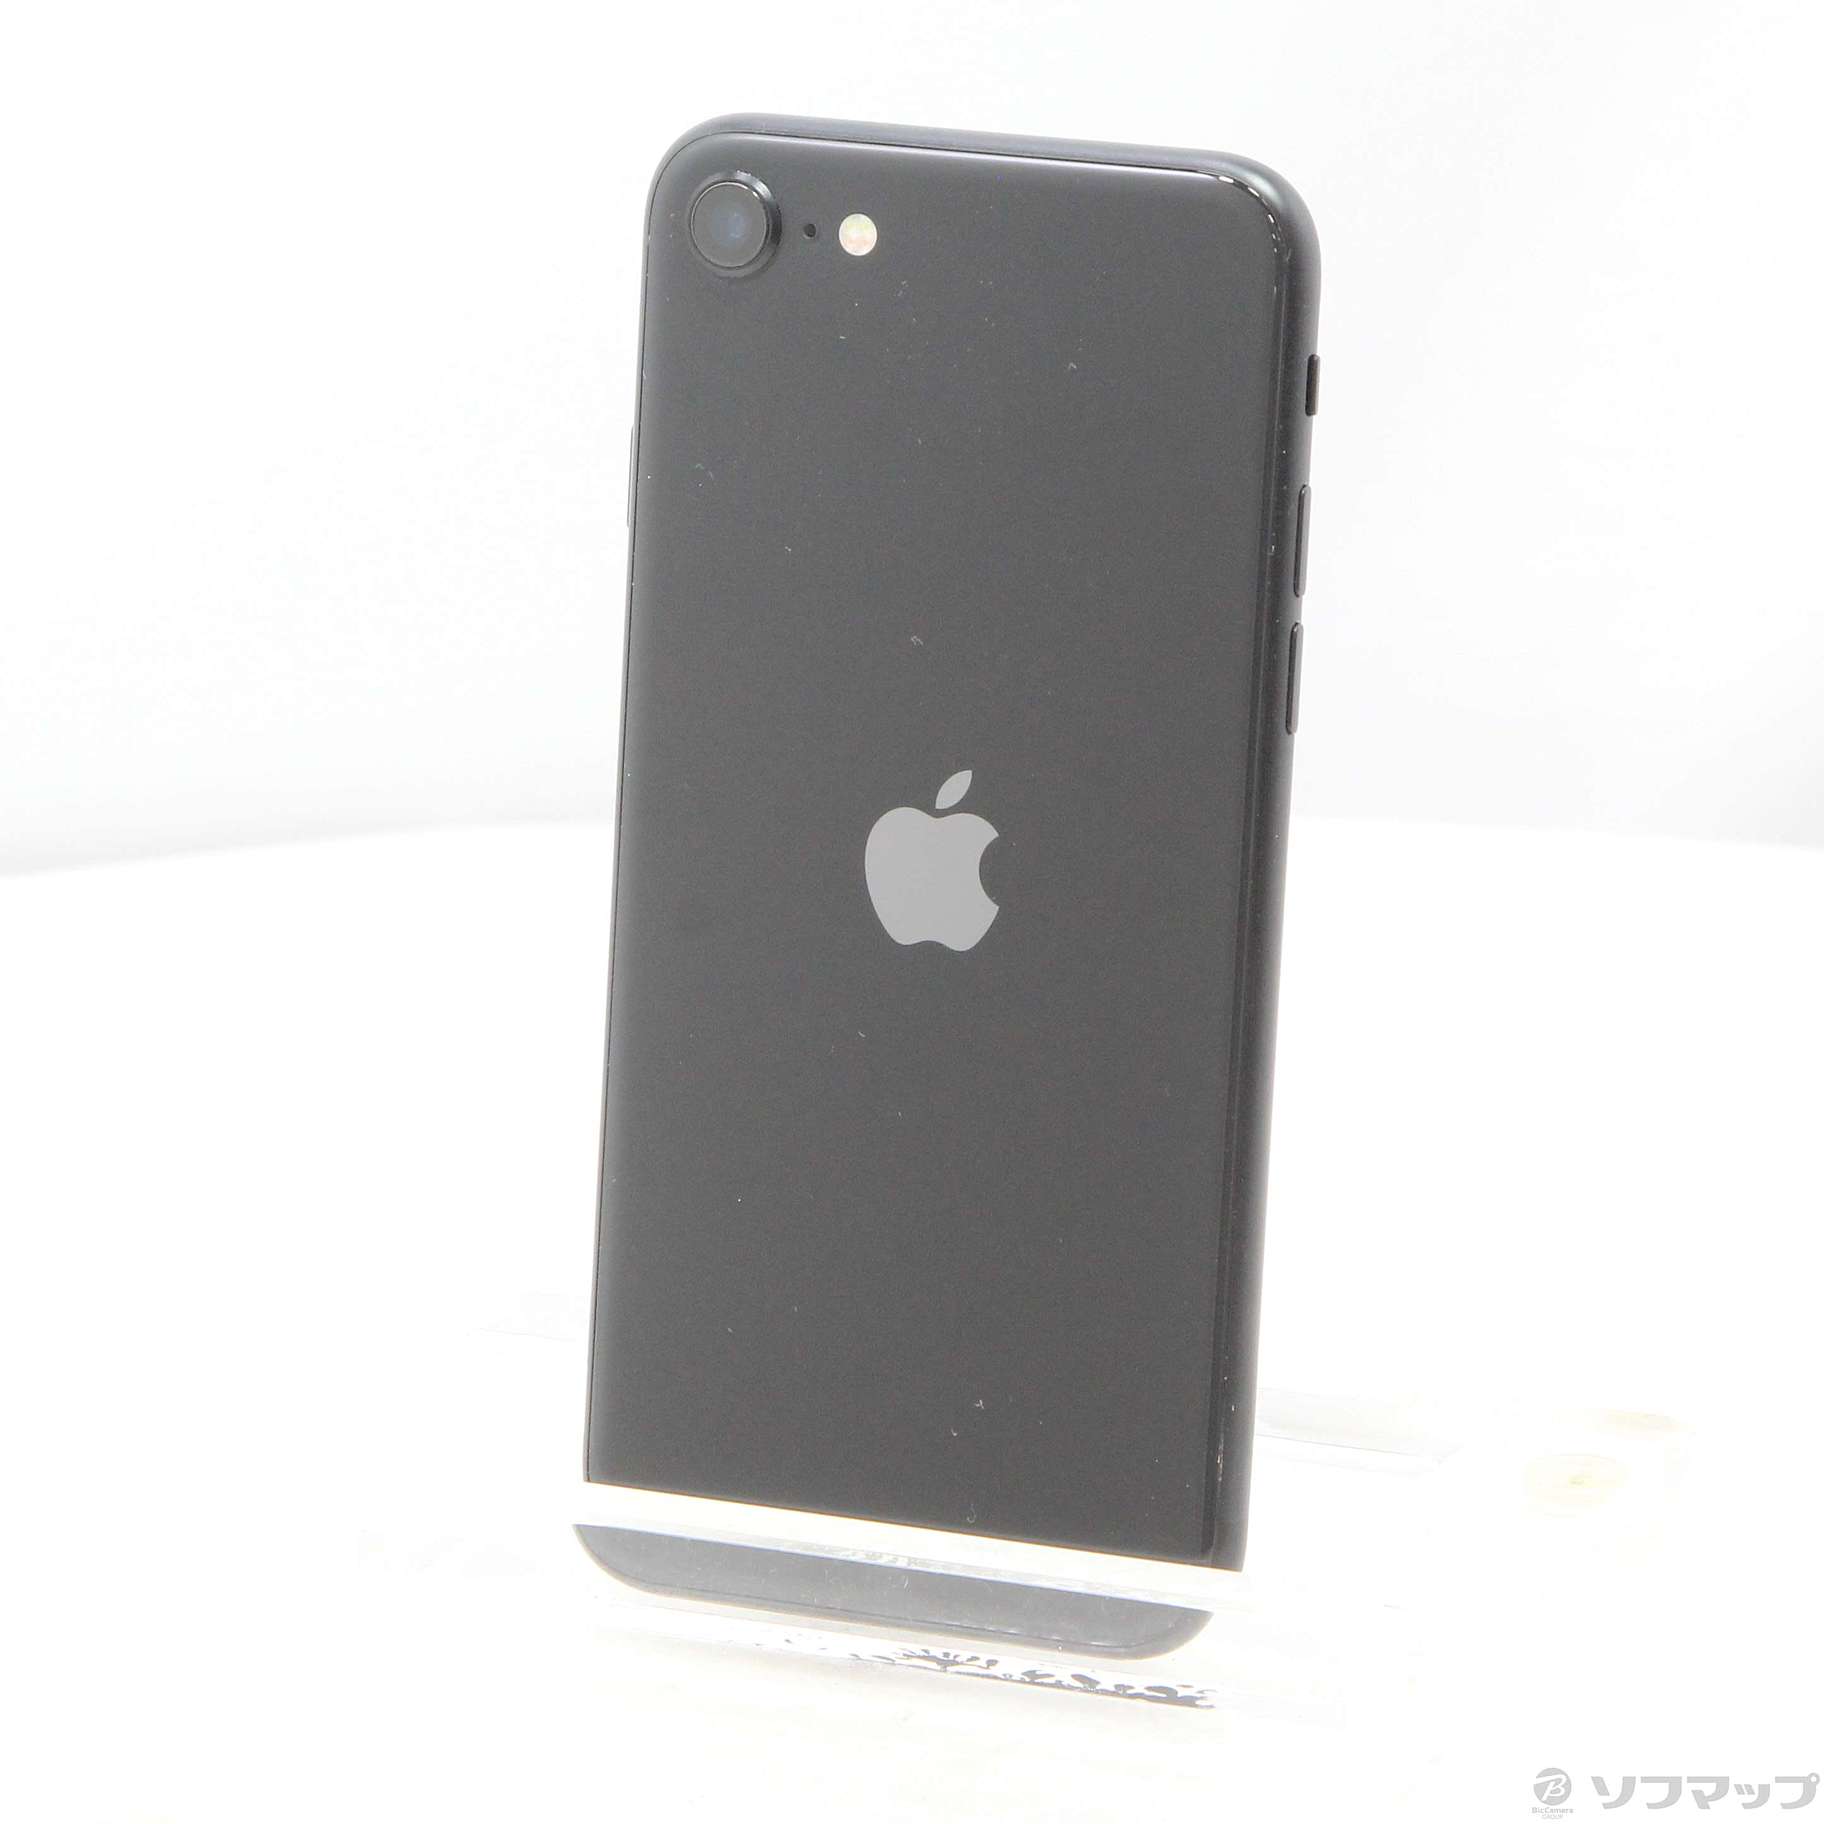 iPhone SE 第2世代 (SE2) ブラック 256GB機種名iPhoneSE第2世代